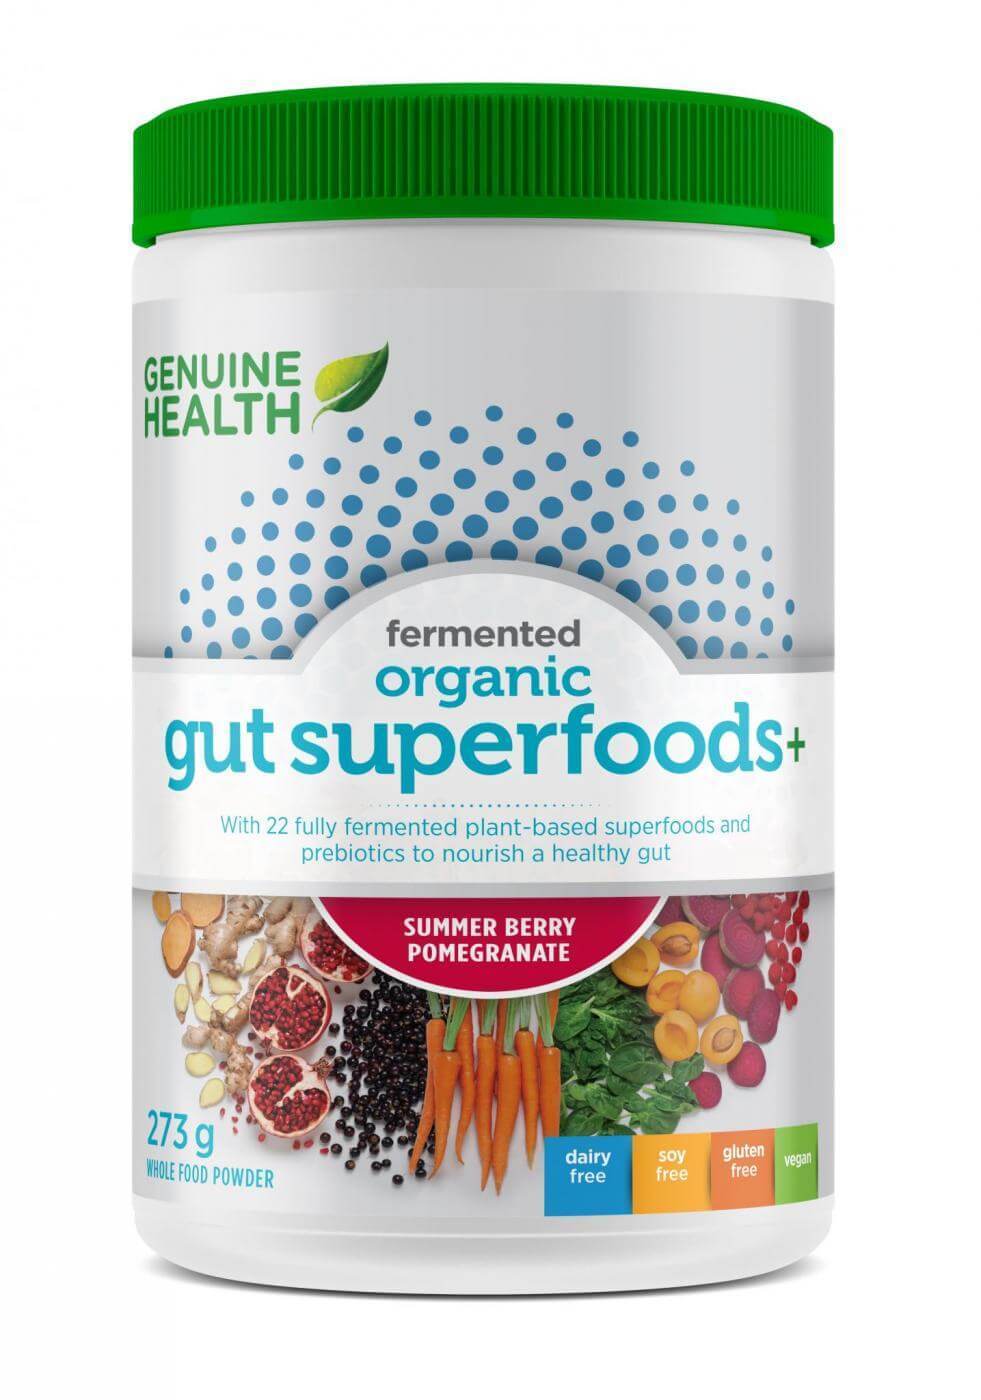 Genuine Health Fermented Organic Gut Superfoods+ Summer Berry Pomegranate 273g